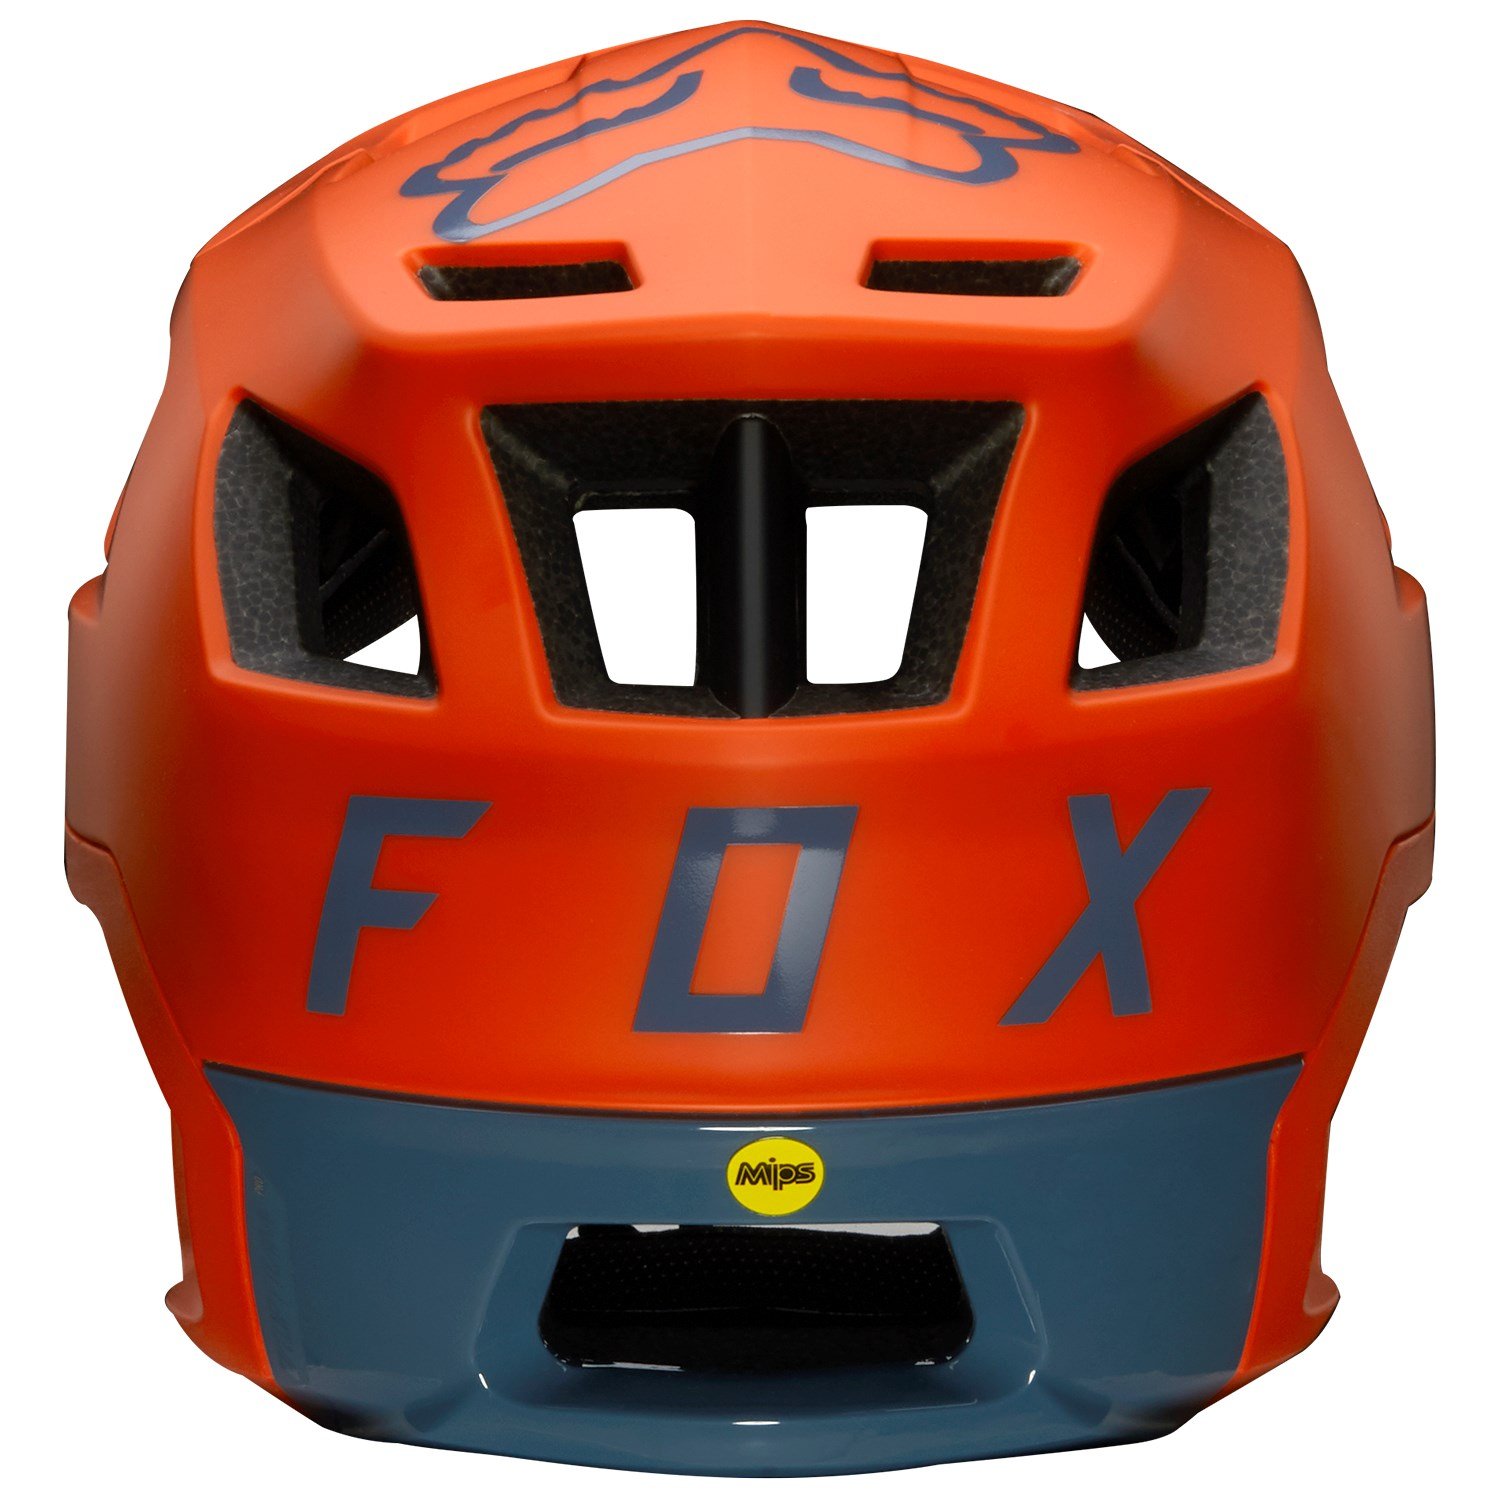 dropframe pro helmet